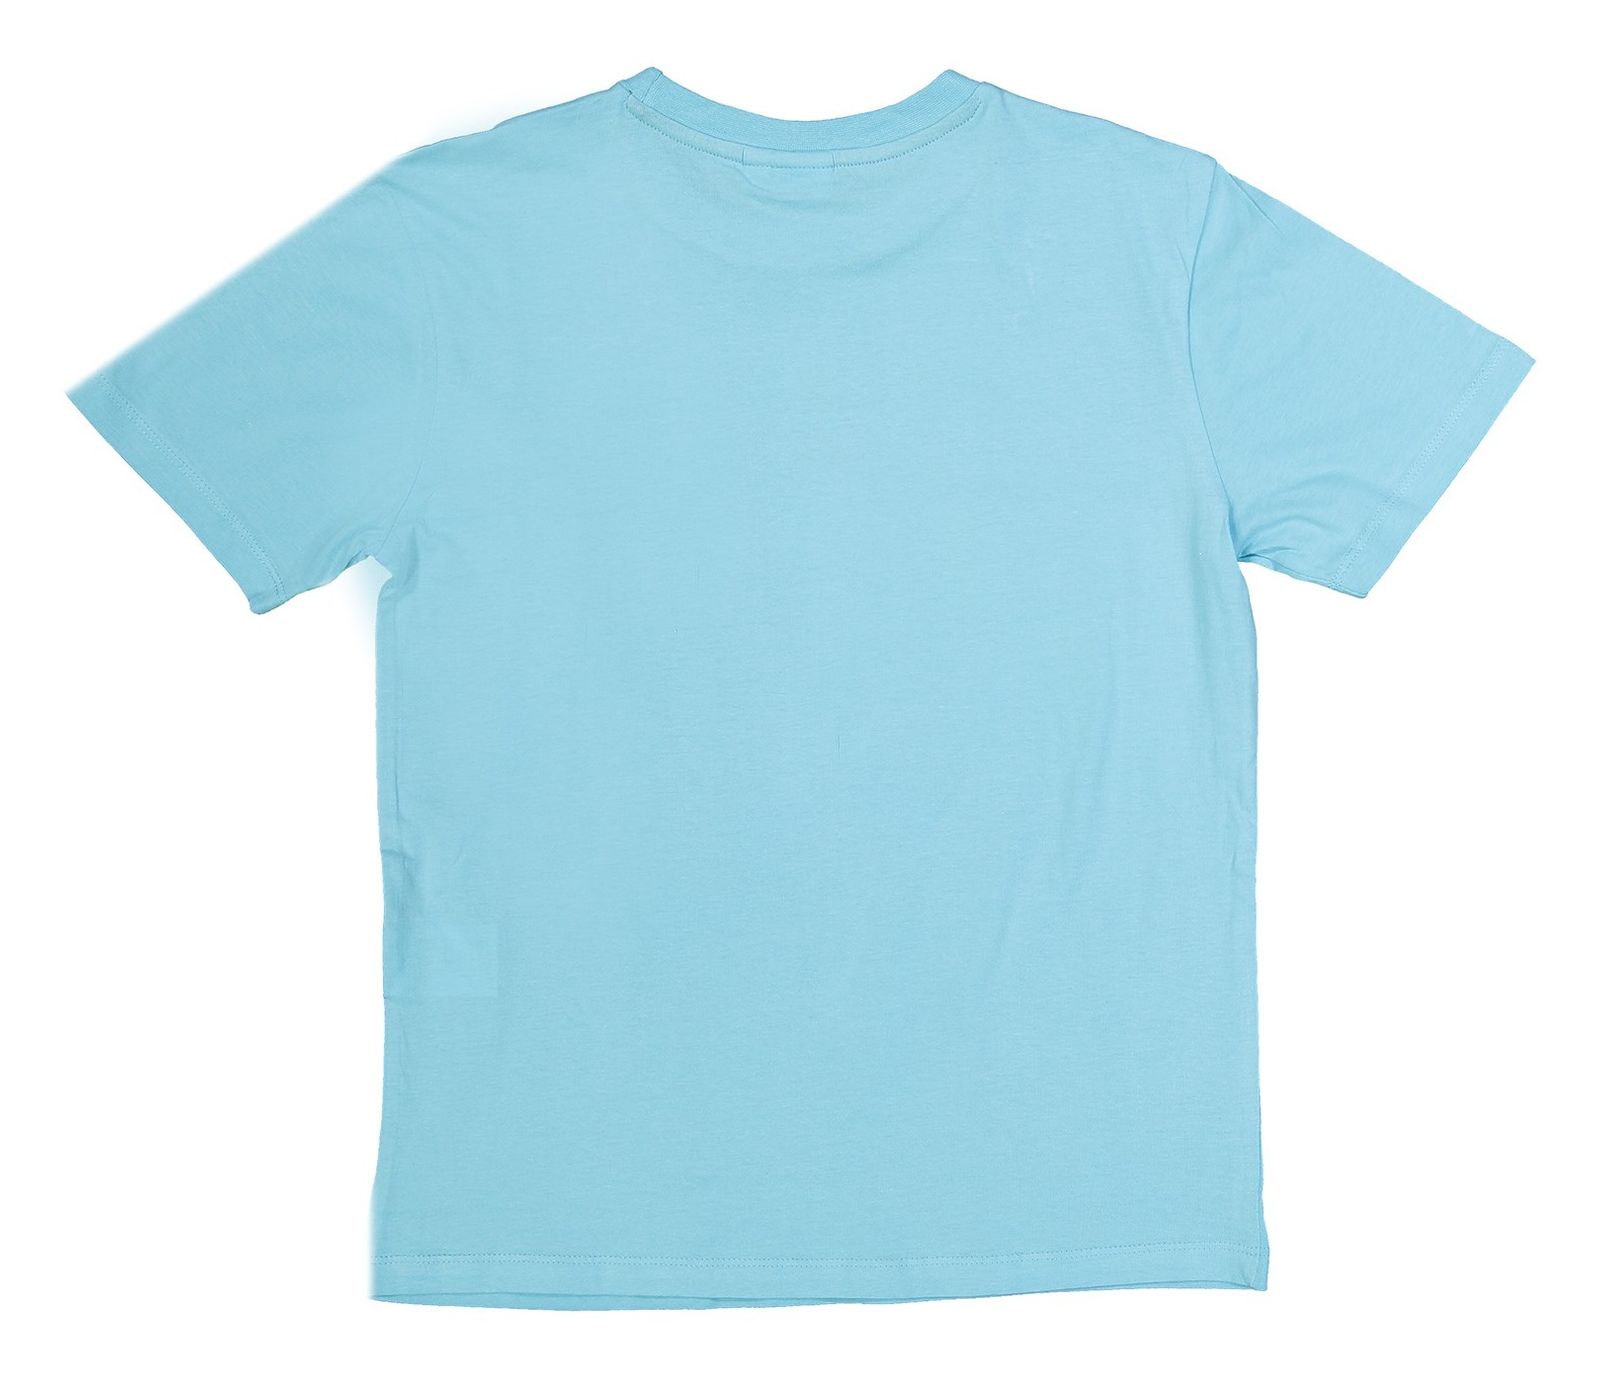 تی شرت و شلوارک نخی پسرانه بسته 2 عددی - بلوکیدز - چند رنگ - 5